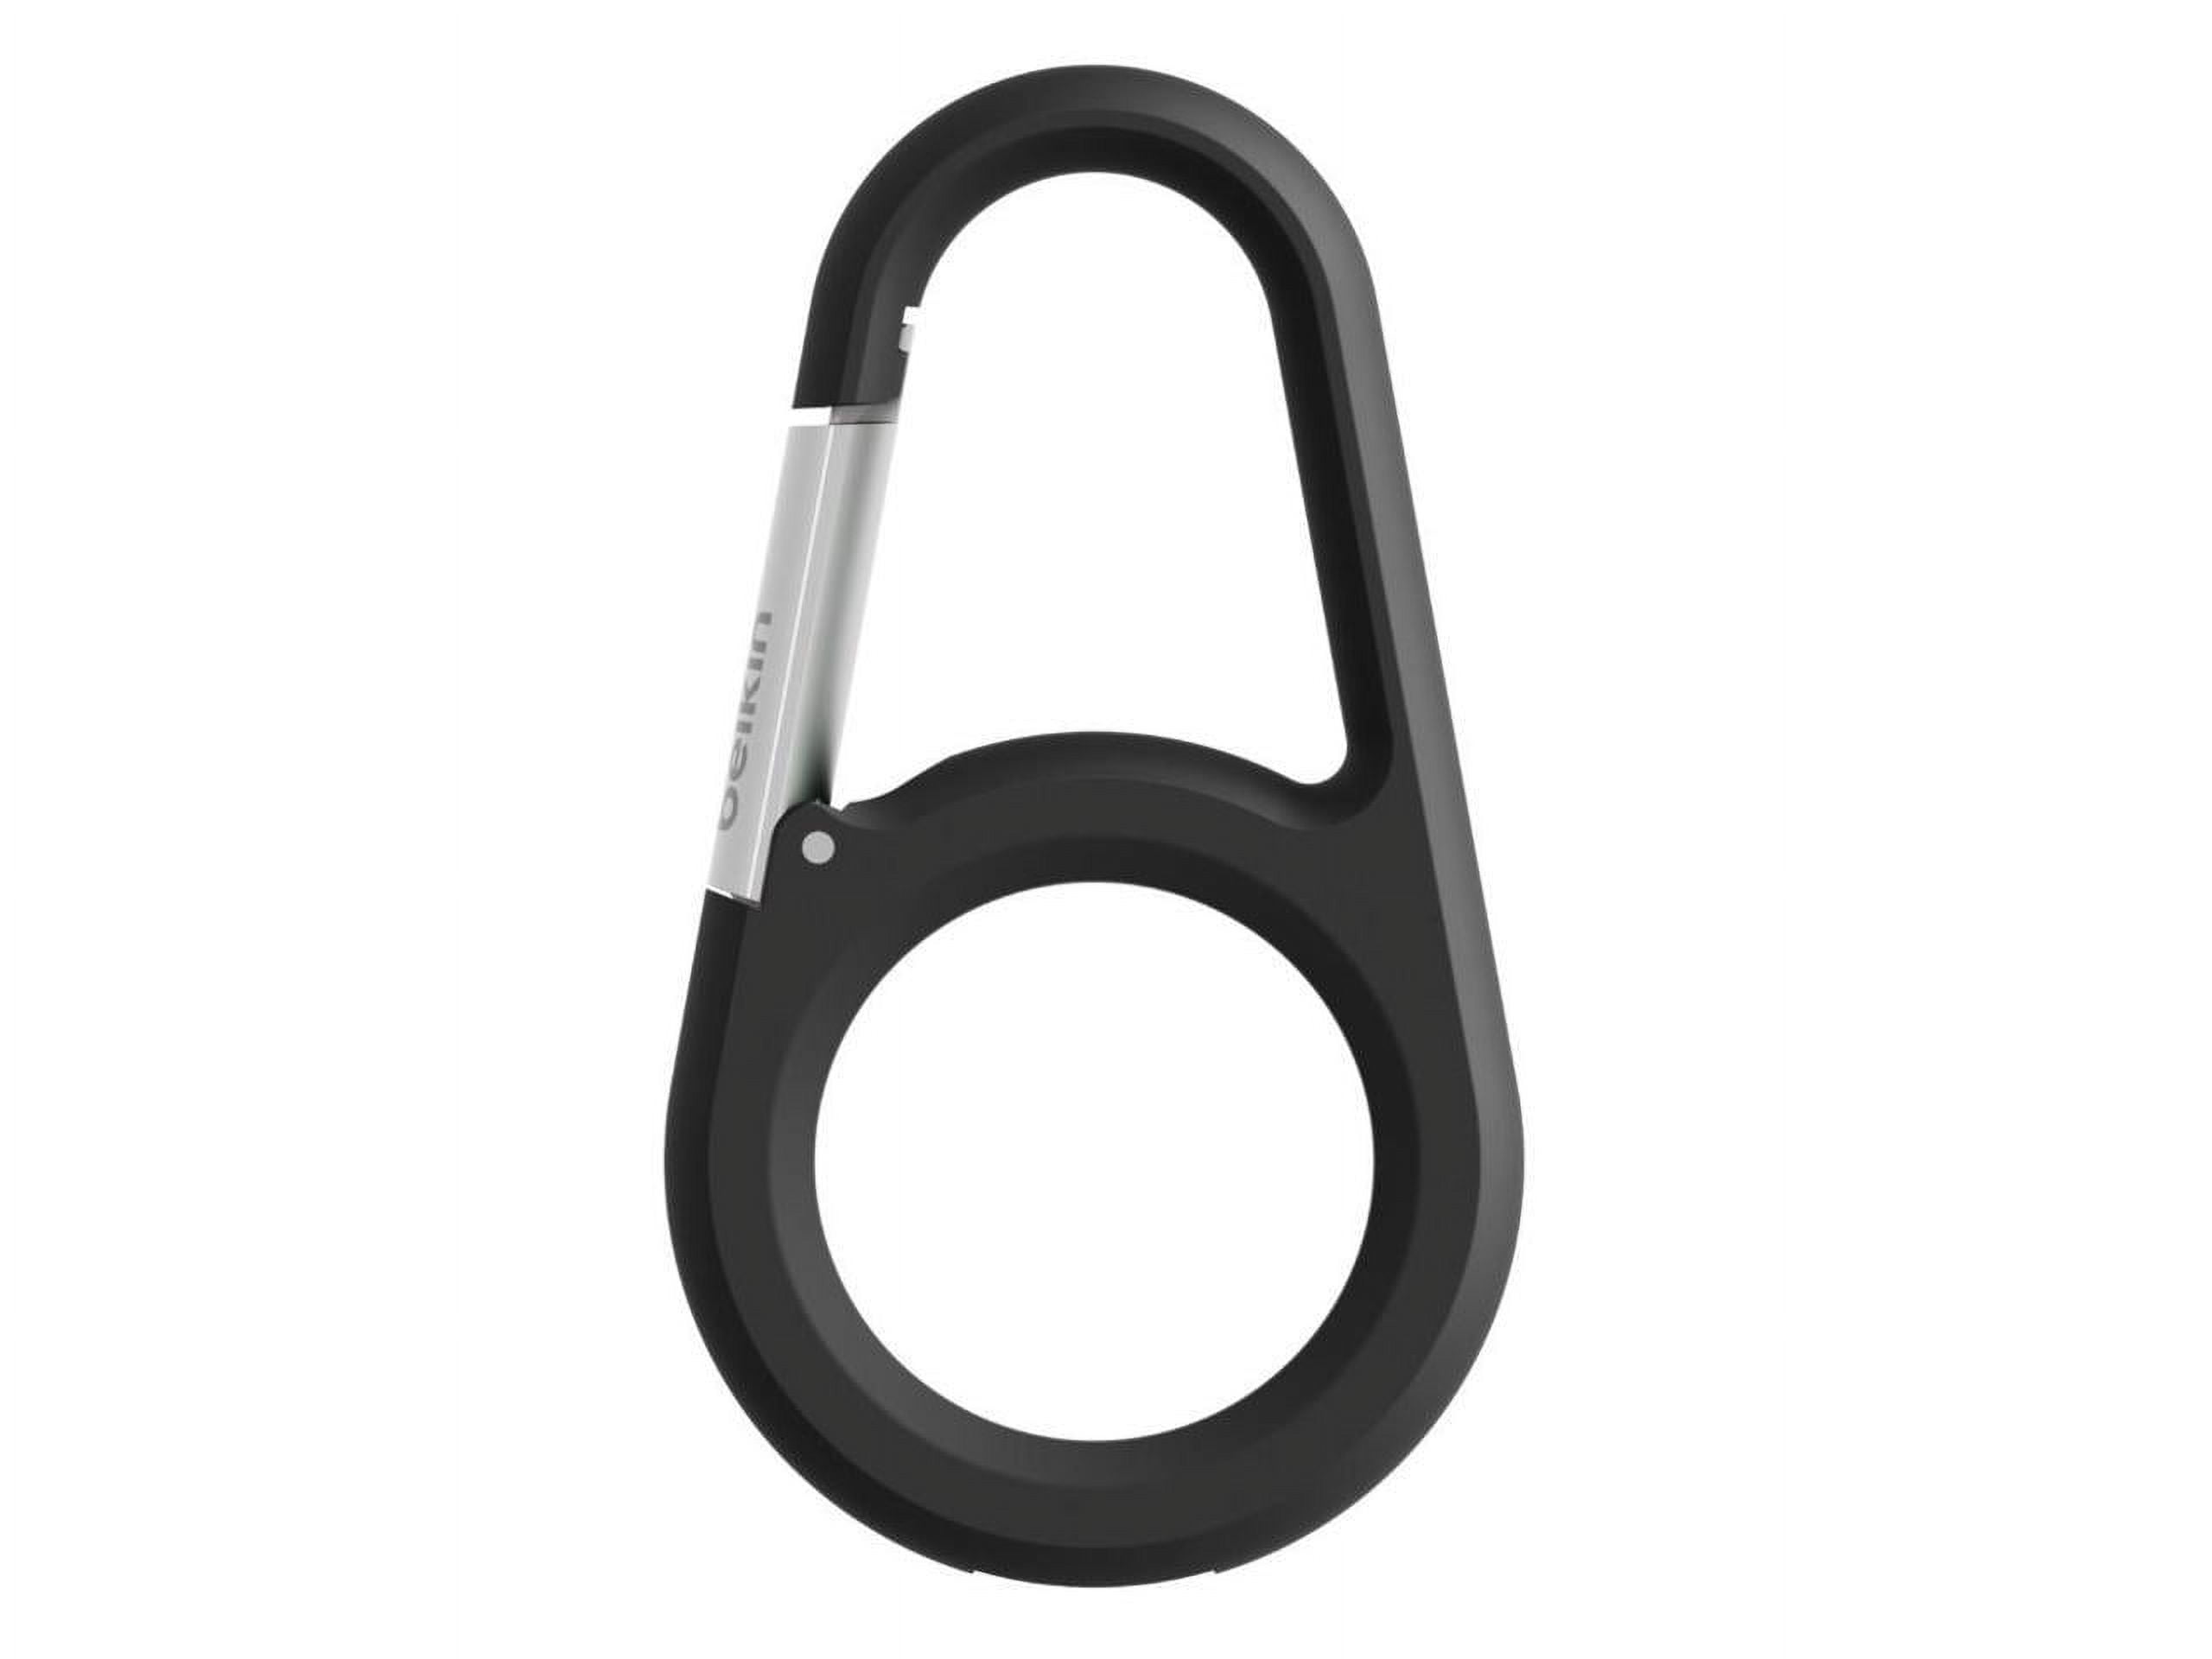 D-Ring Carabiner For Keys x 3 -Key Ring, Keyring-FREE POSTAGE